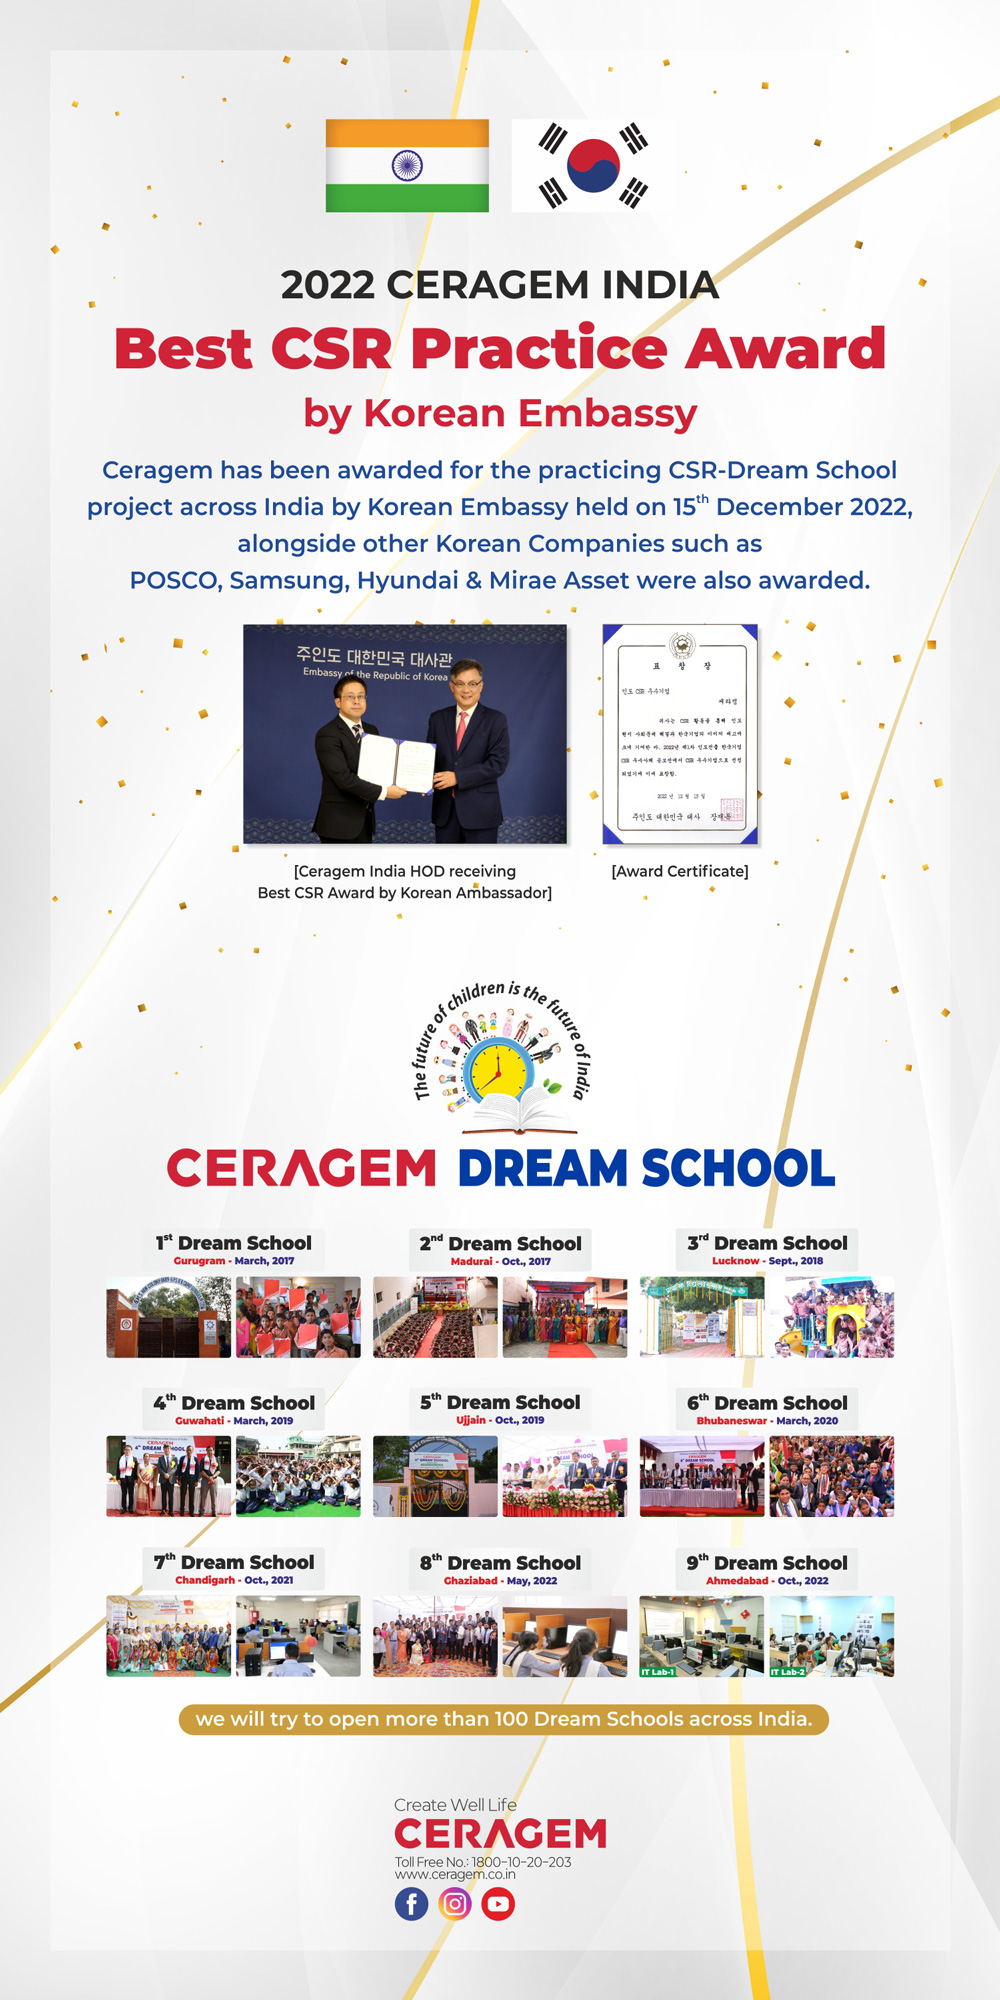 2022 Ceragem India Best CSR Practice Award by Korean Embassy